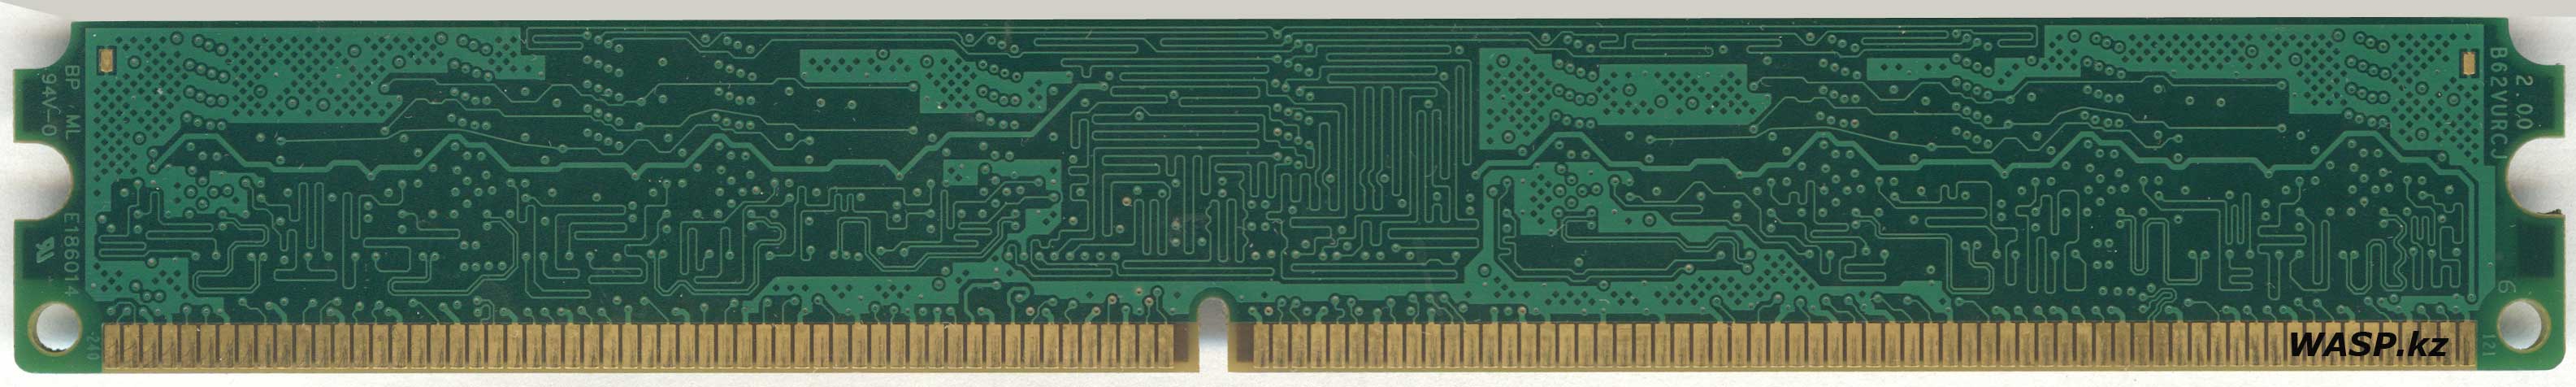 Transcend 1G DDR2 800 DIMM описание памяти Low Profile для ПК